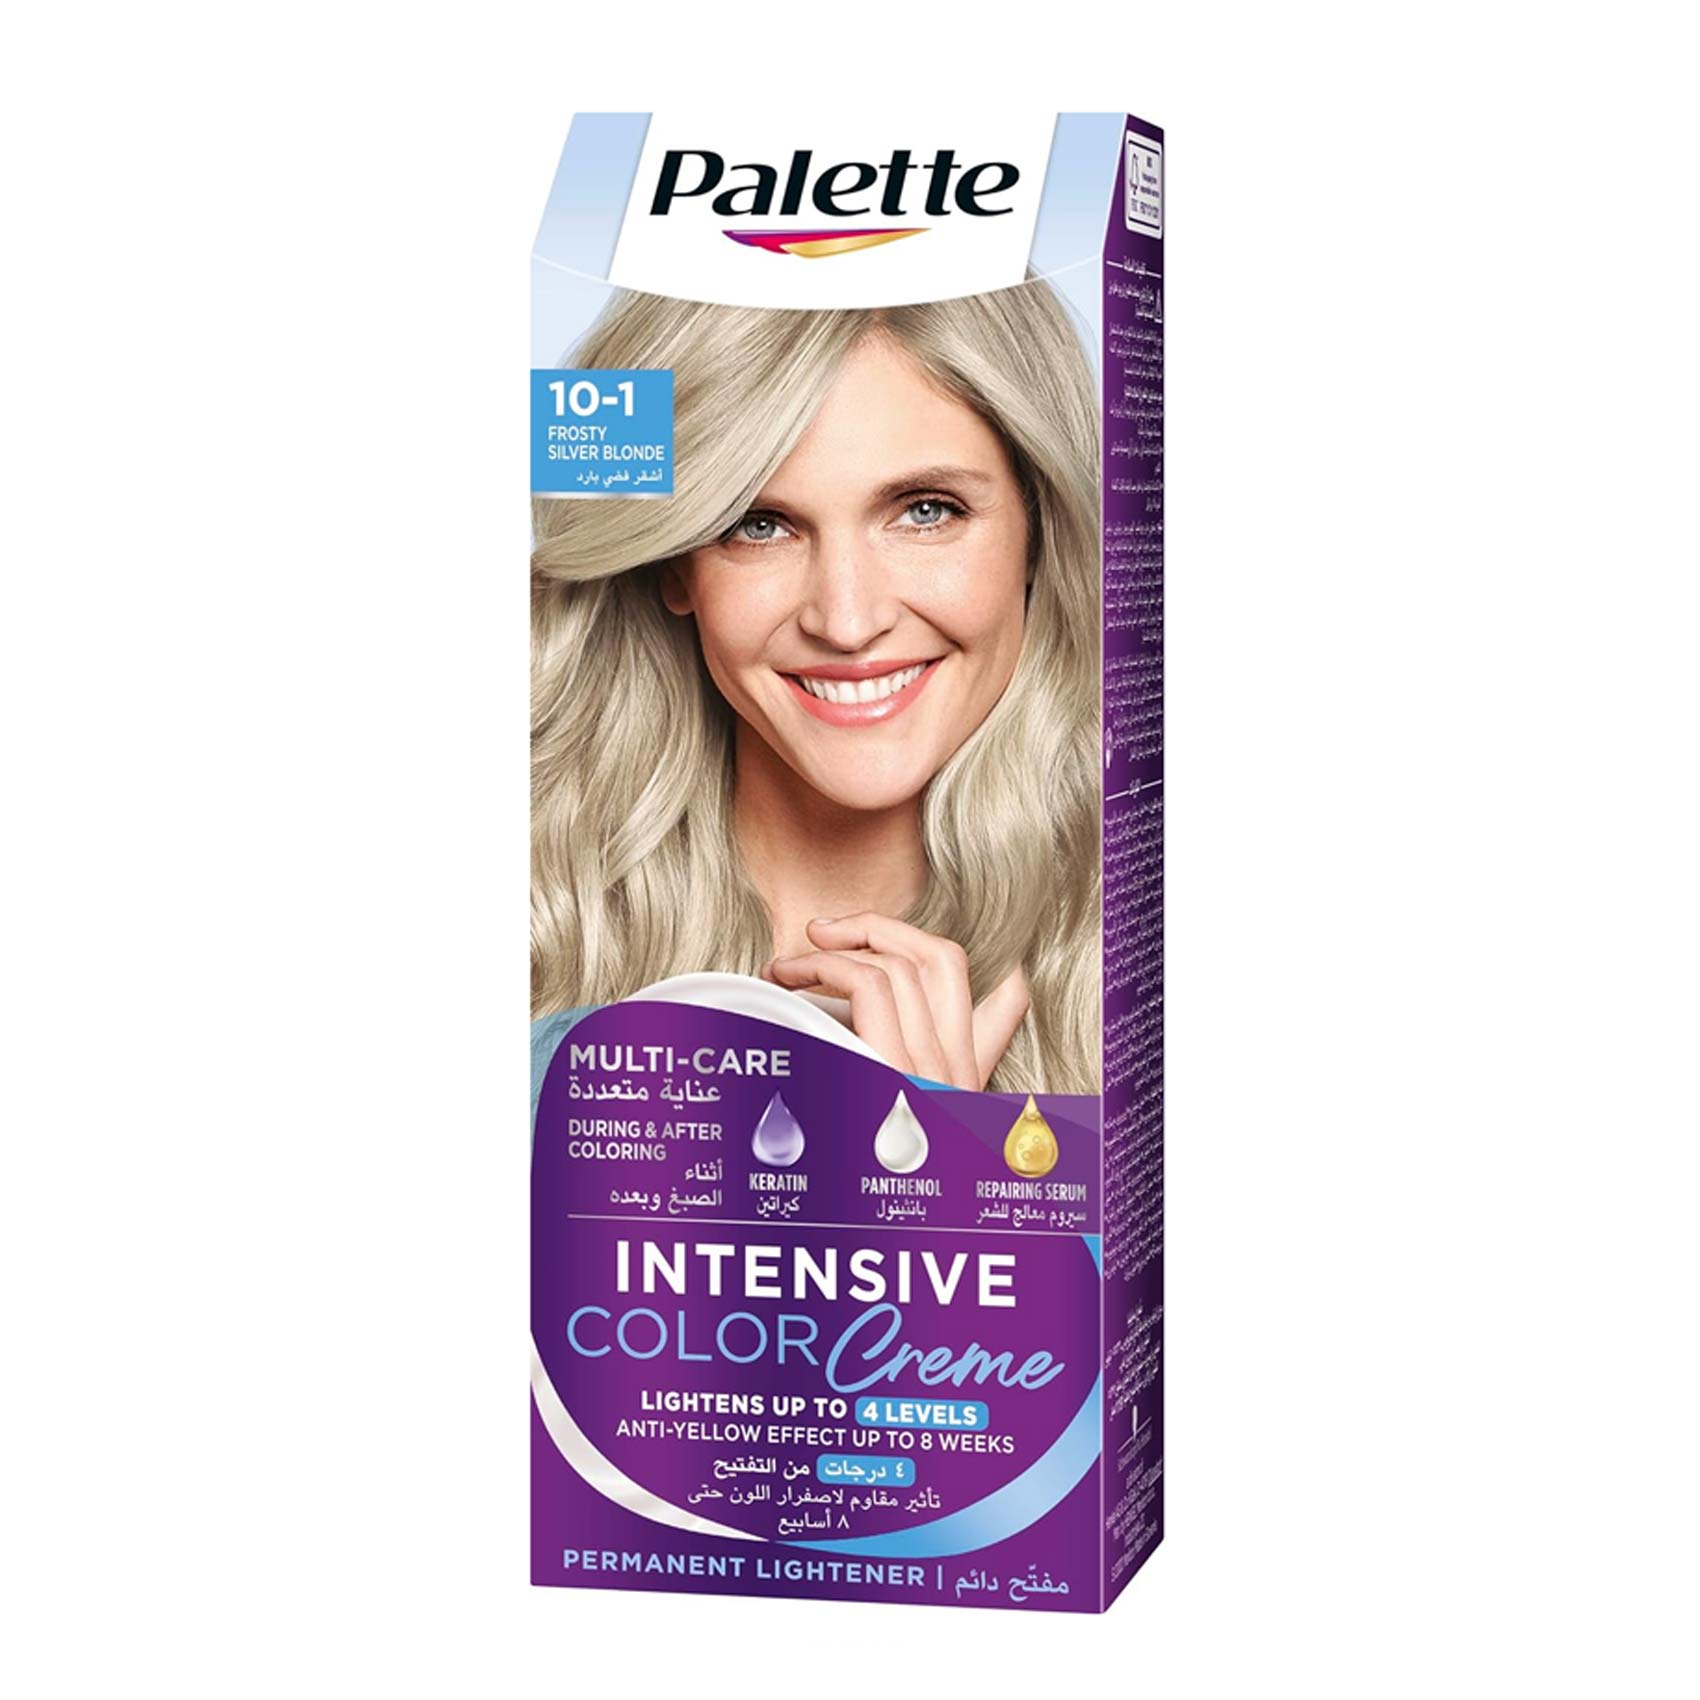 Schwarzkopf Palette Permanent Lightener Intensive Hair Color Cream 10-1 Arctic Silver Blond 50ml